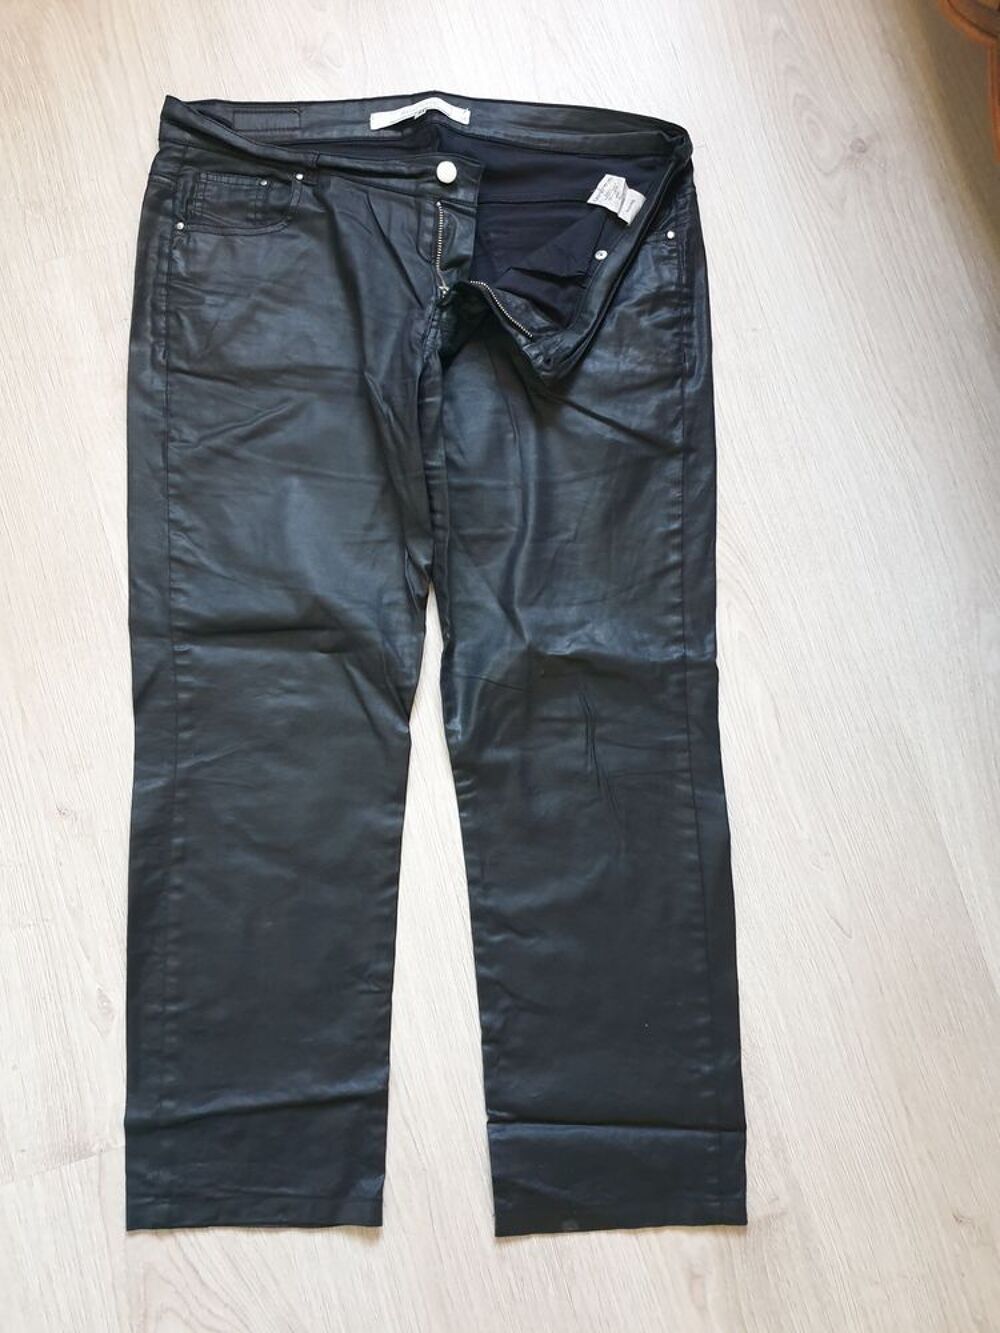 2 Pantalons noirs effet glac&eacute; Biscote taille 44 Vtements